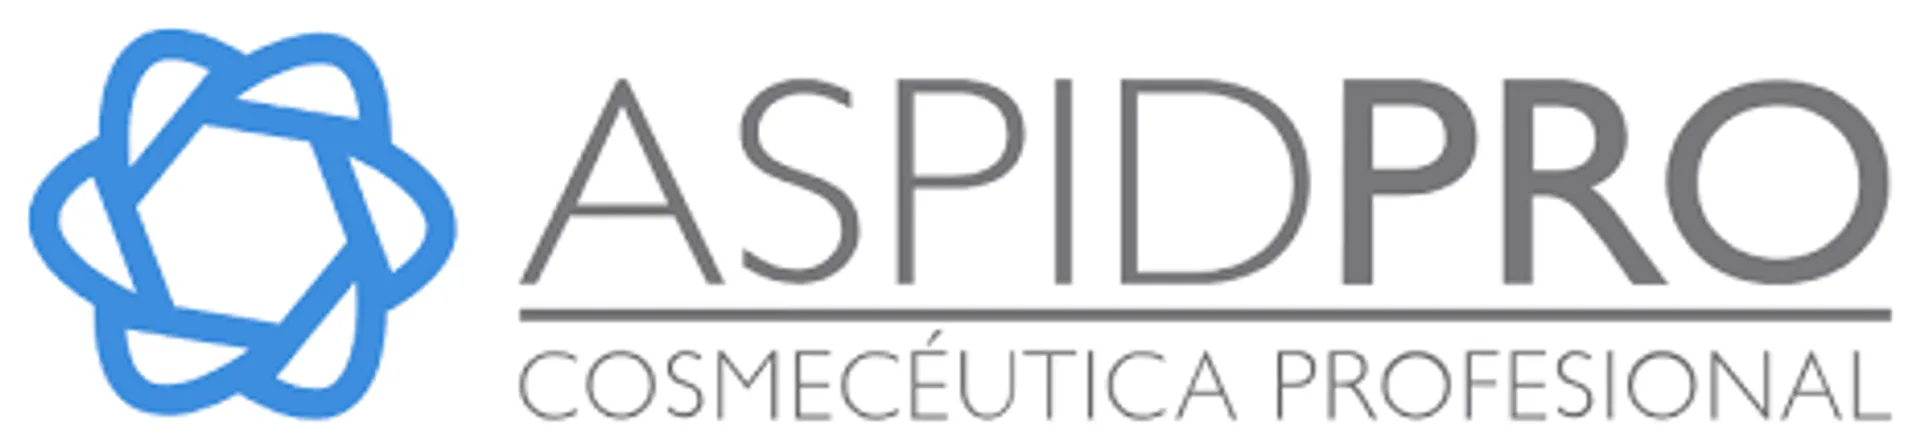 ASPIDPRO logo